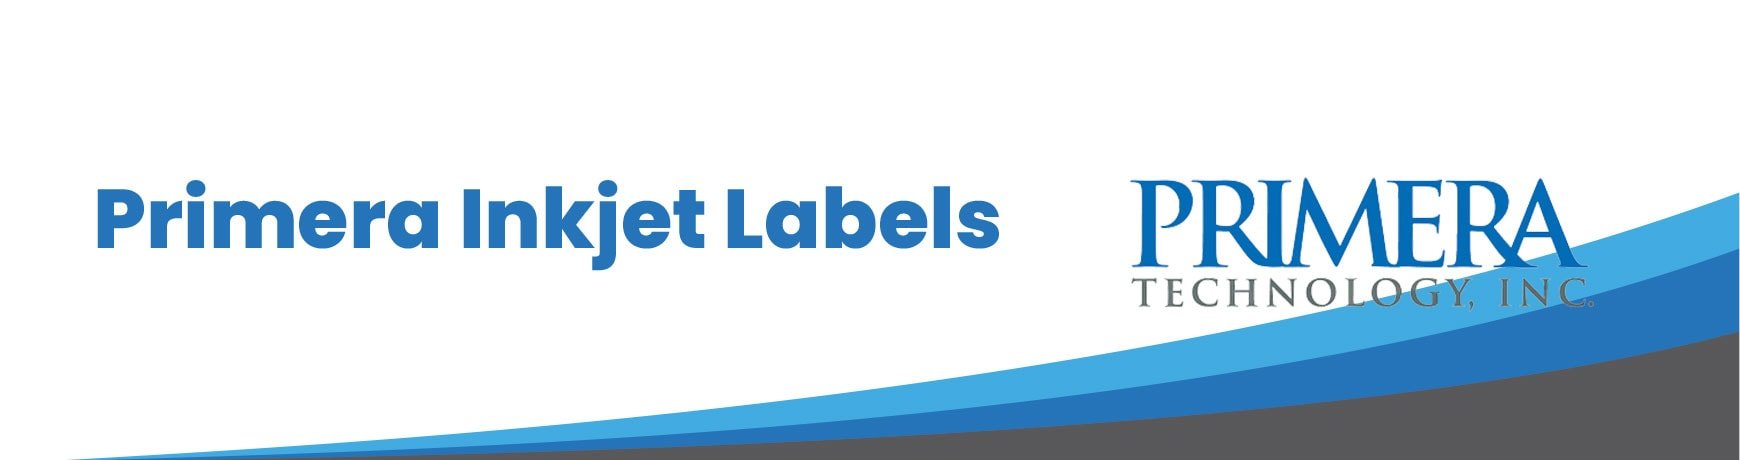 Primera Inkjet Labels